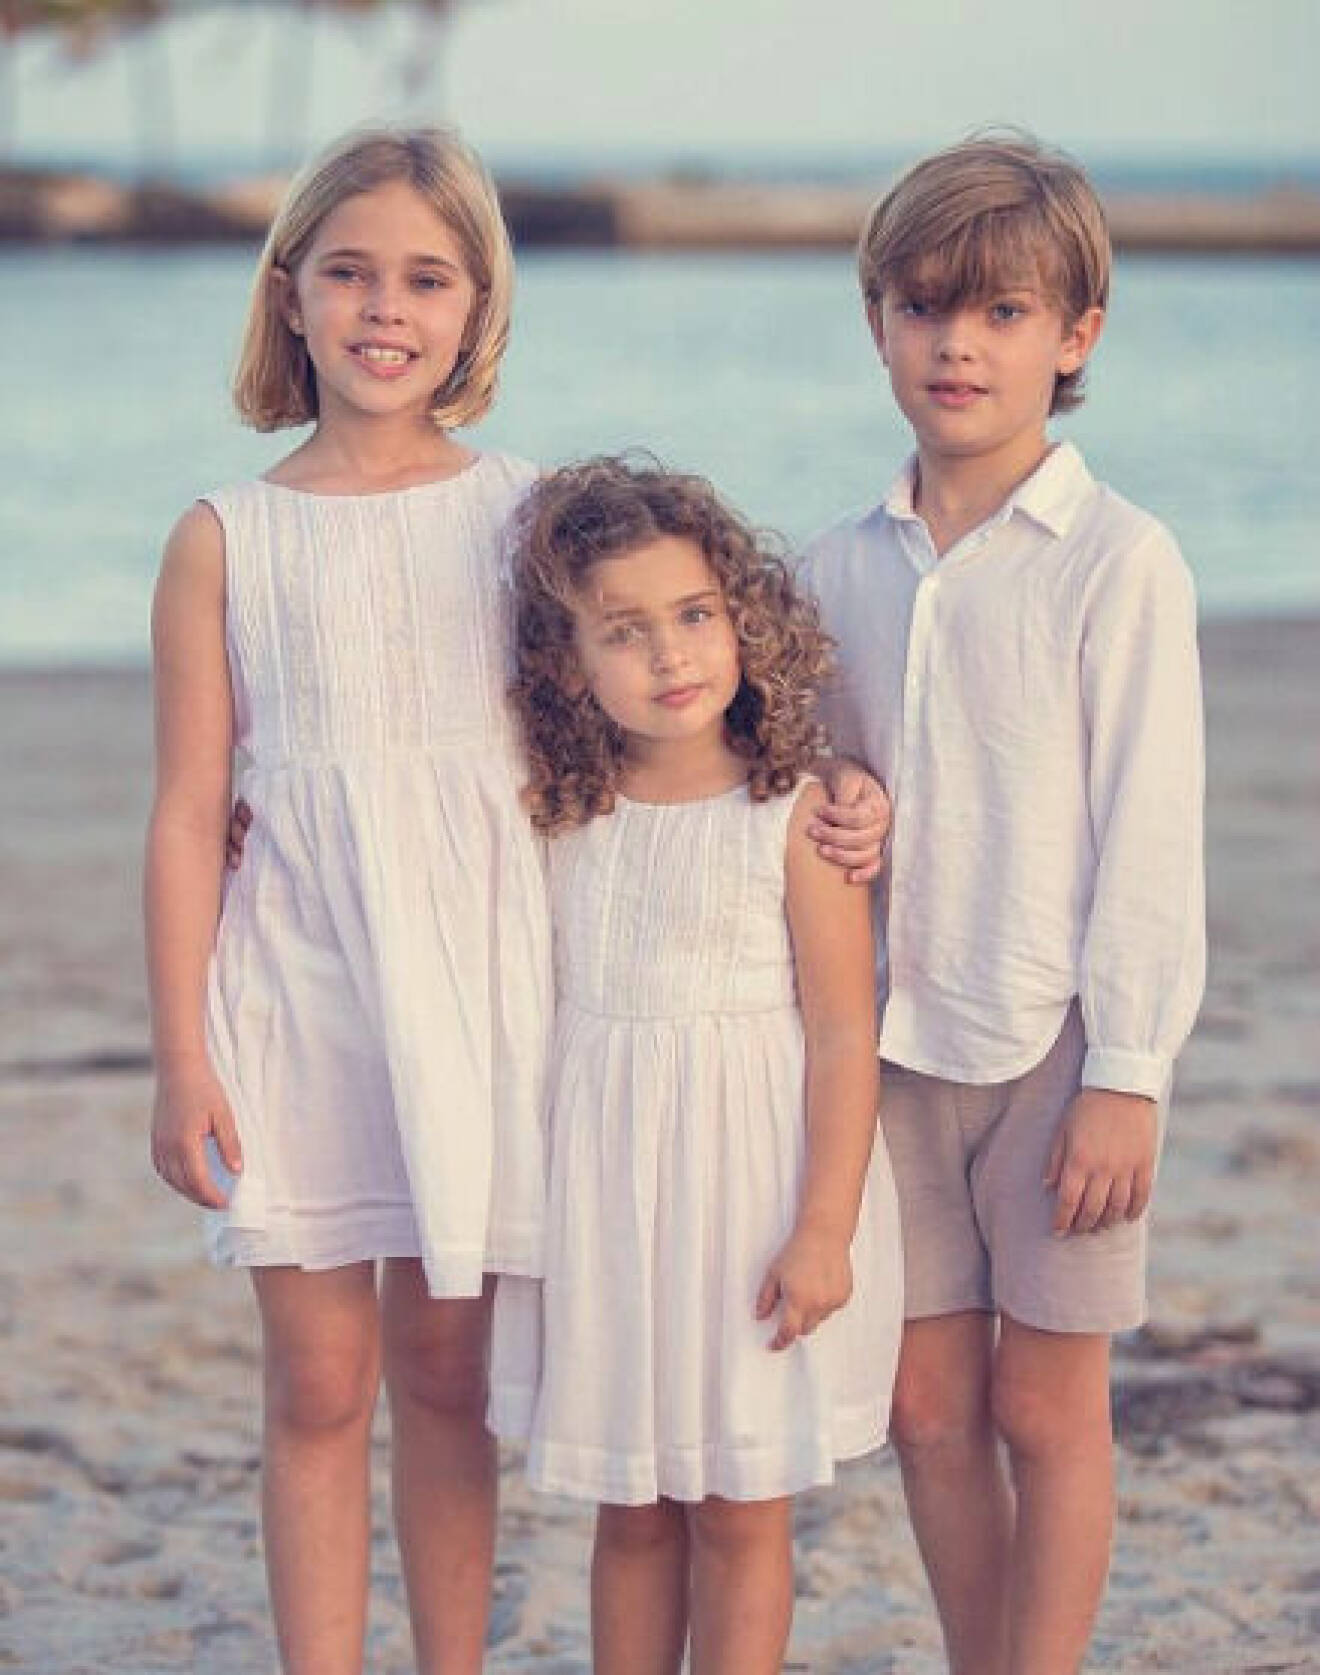 Prinsessan Leonore, prinsessan Adrienne och prins Nicolas på stranden våren 2022